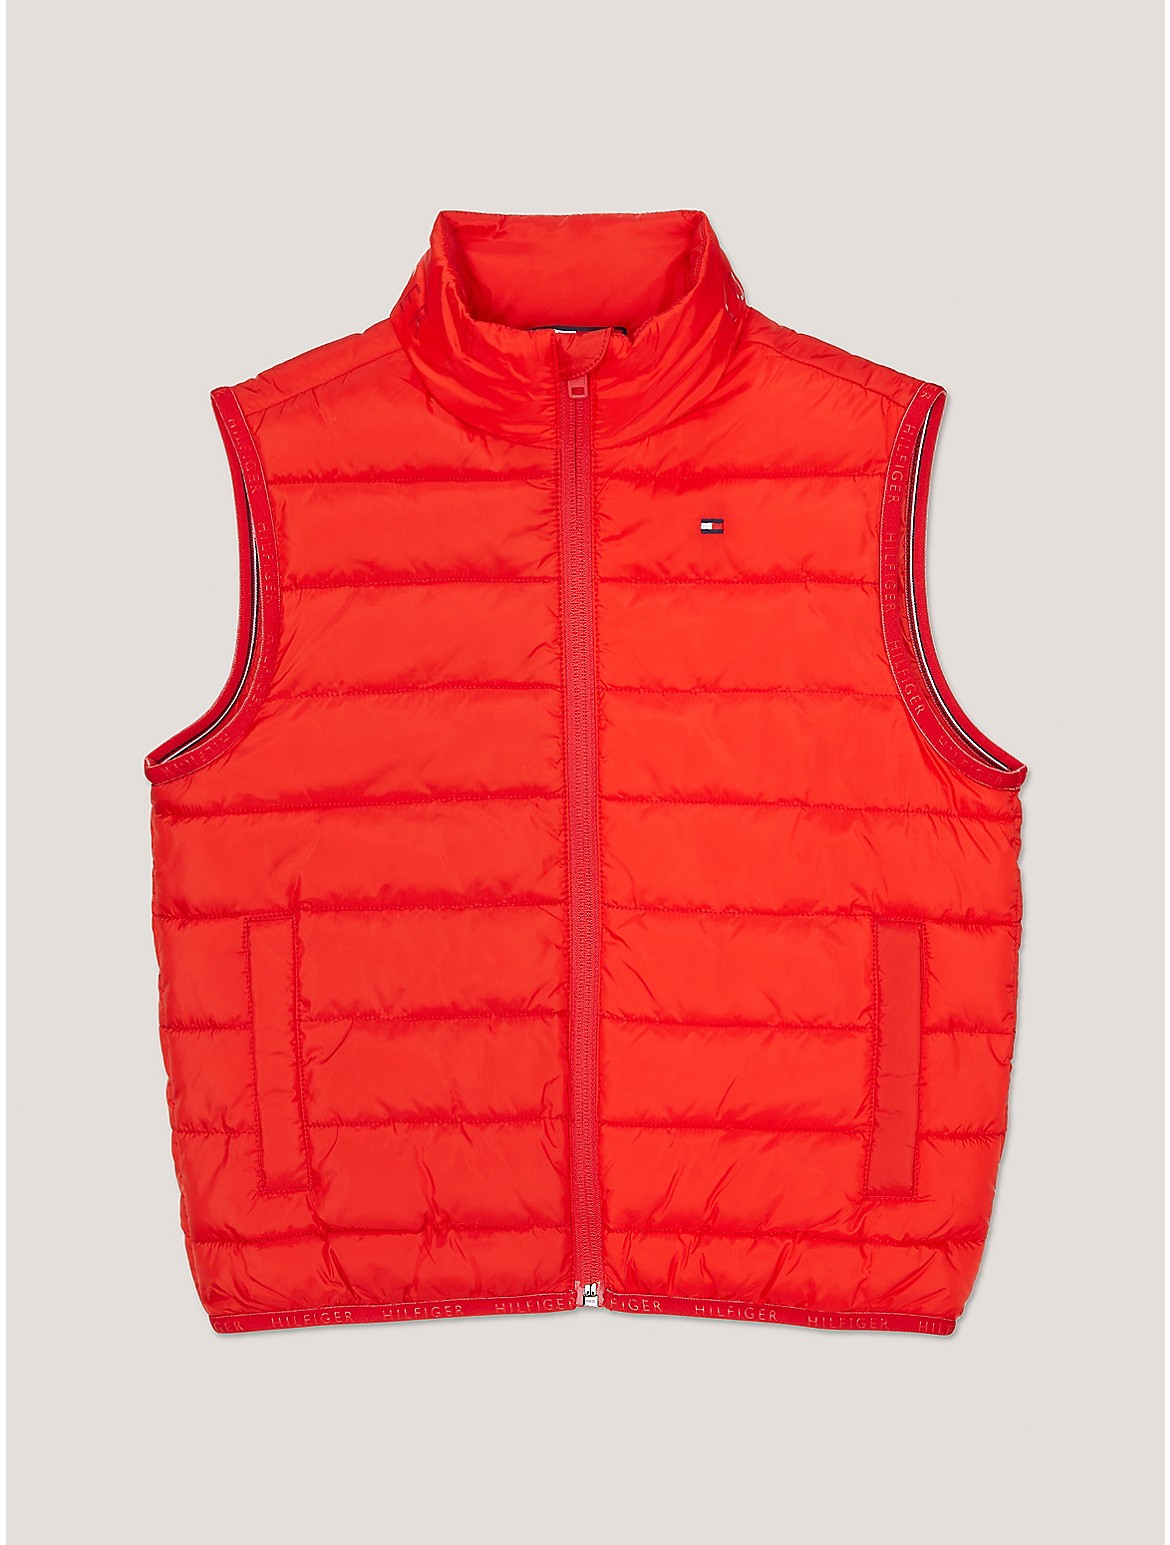 Tommy Hilfiger Boys' Kids' Insulated Vest - Red - M